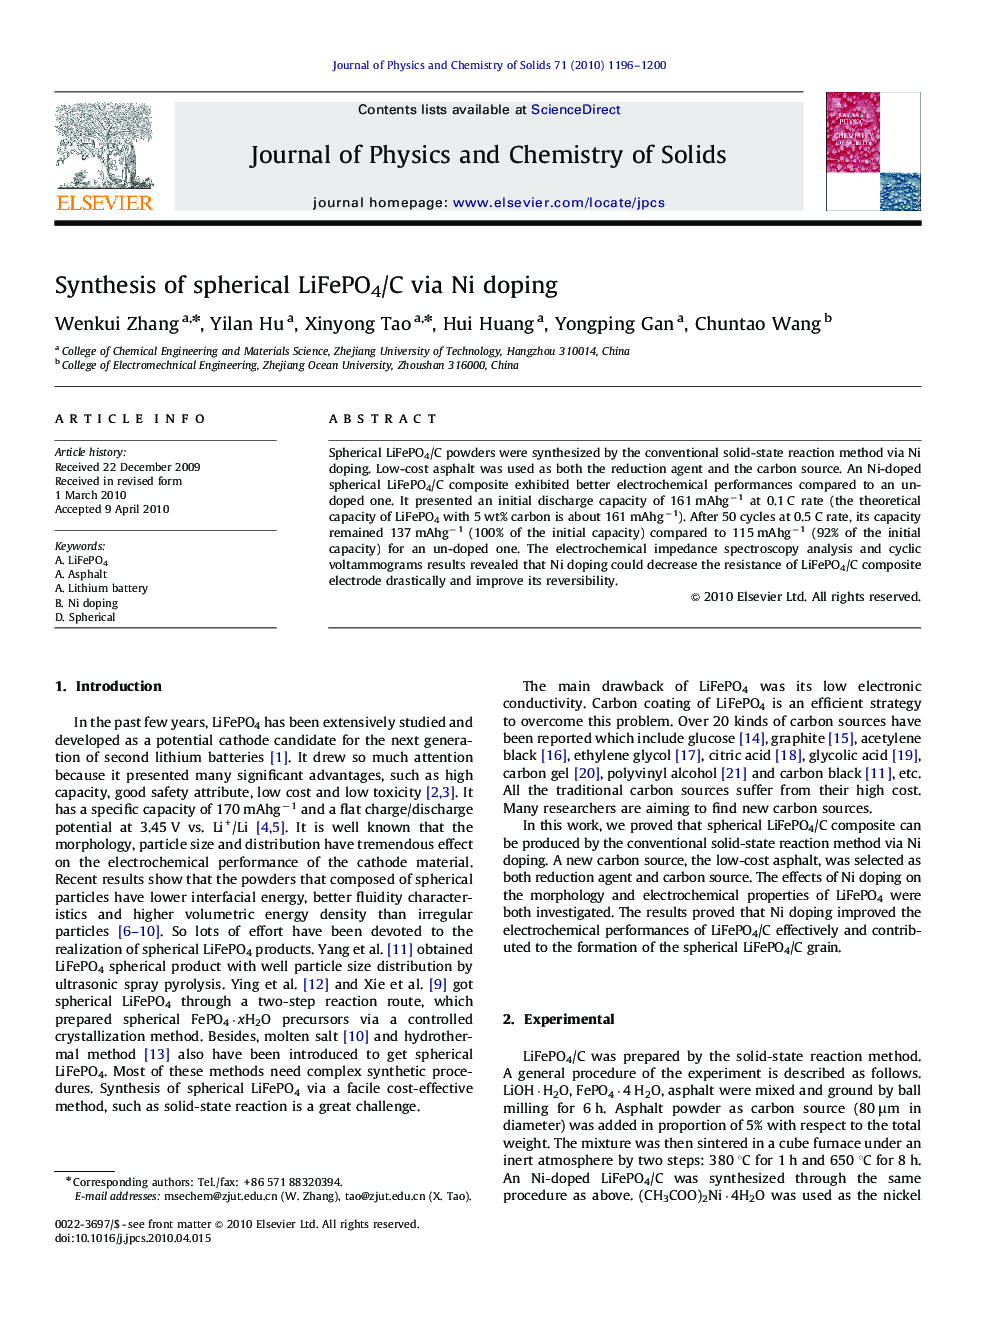 Synthesis of spherical LiFePO4/C via Ni doping